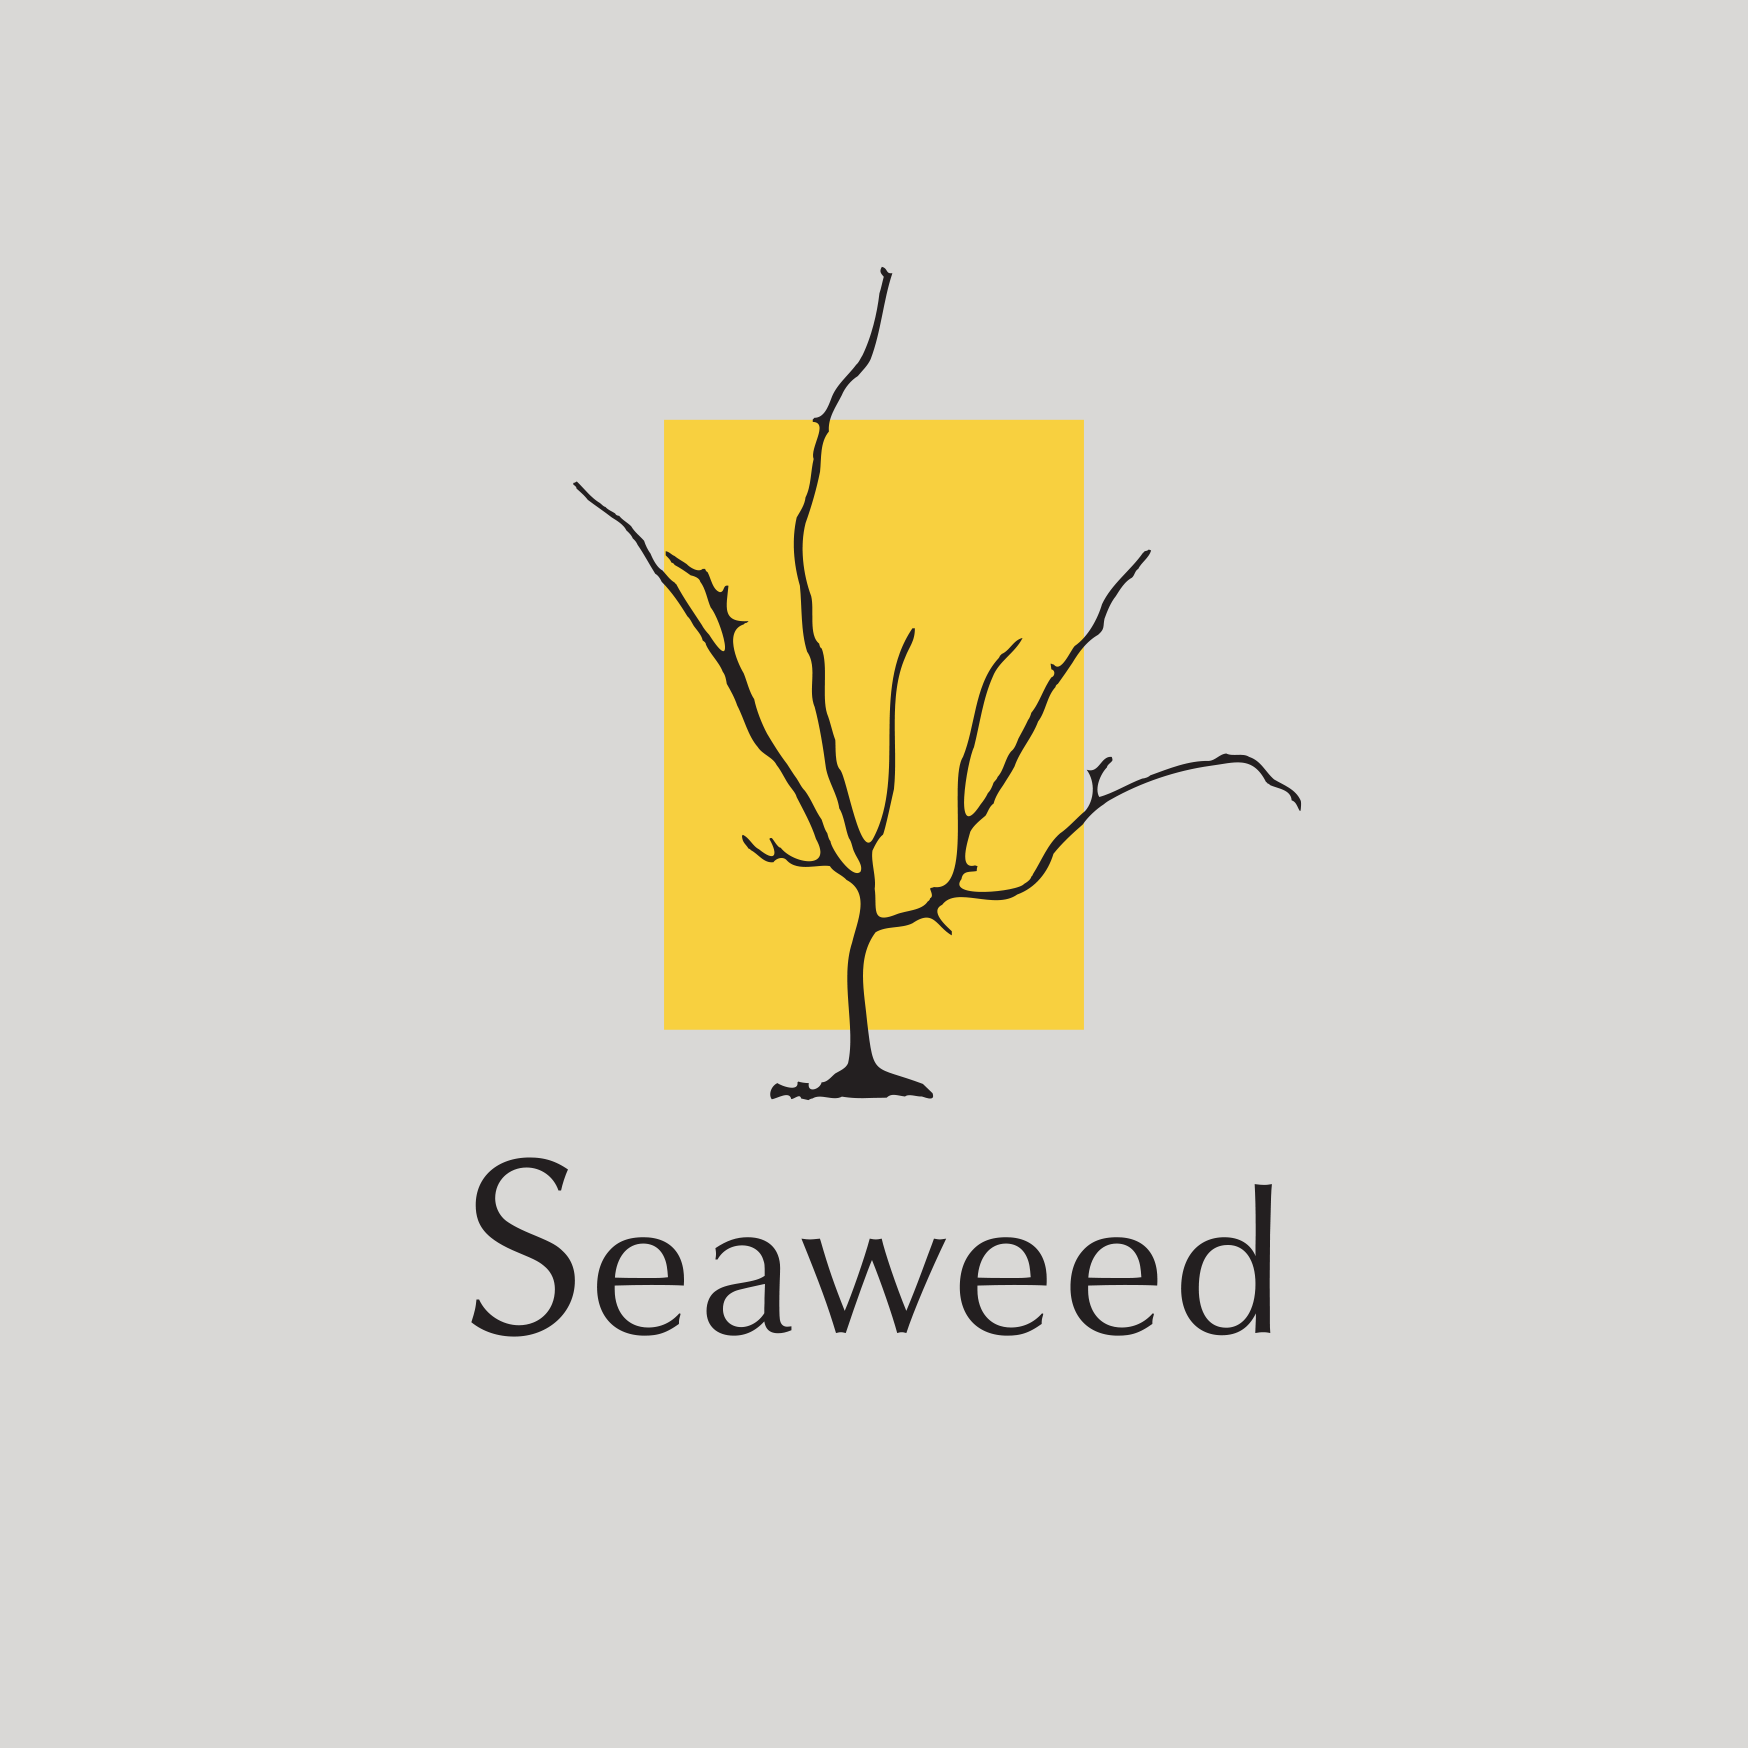 Seaweed UK